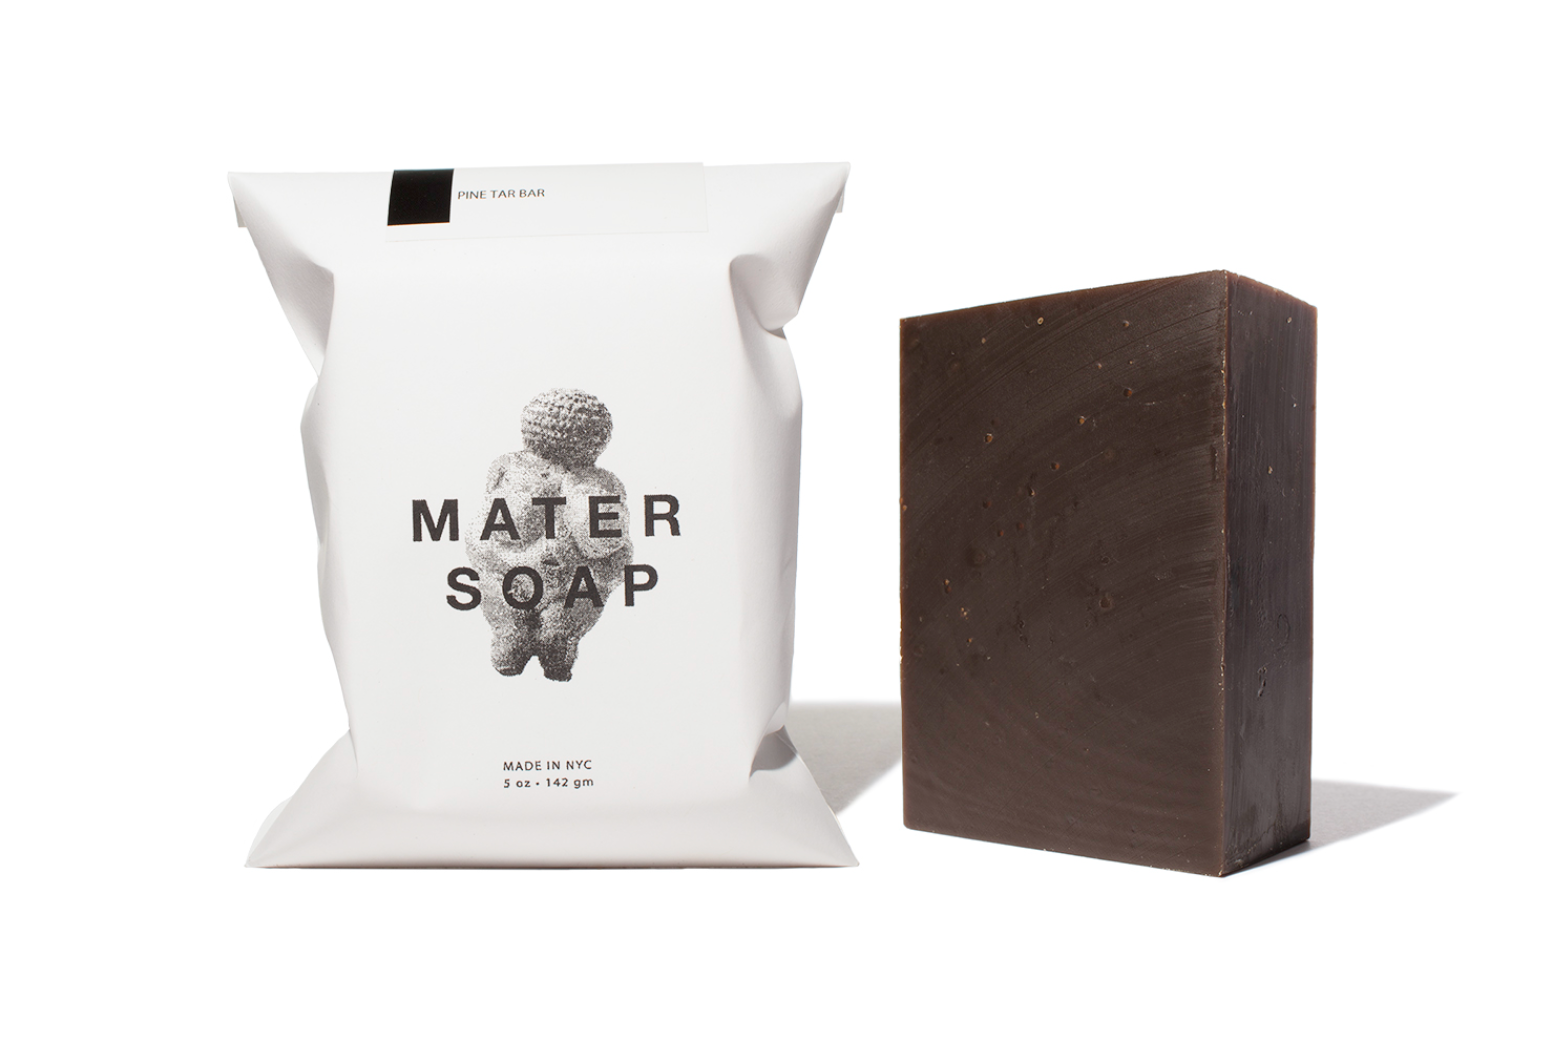 Pine Tar Bar - Mater Soap